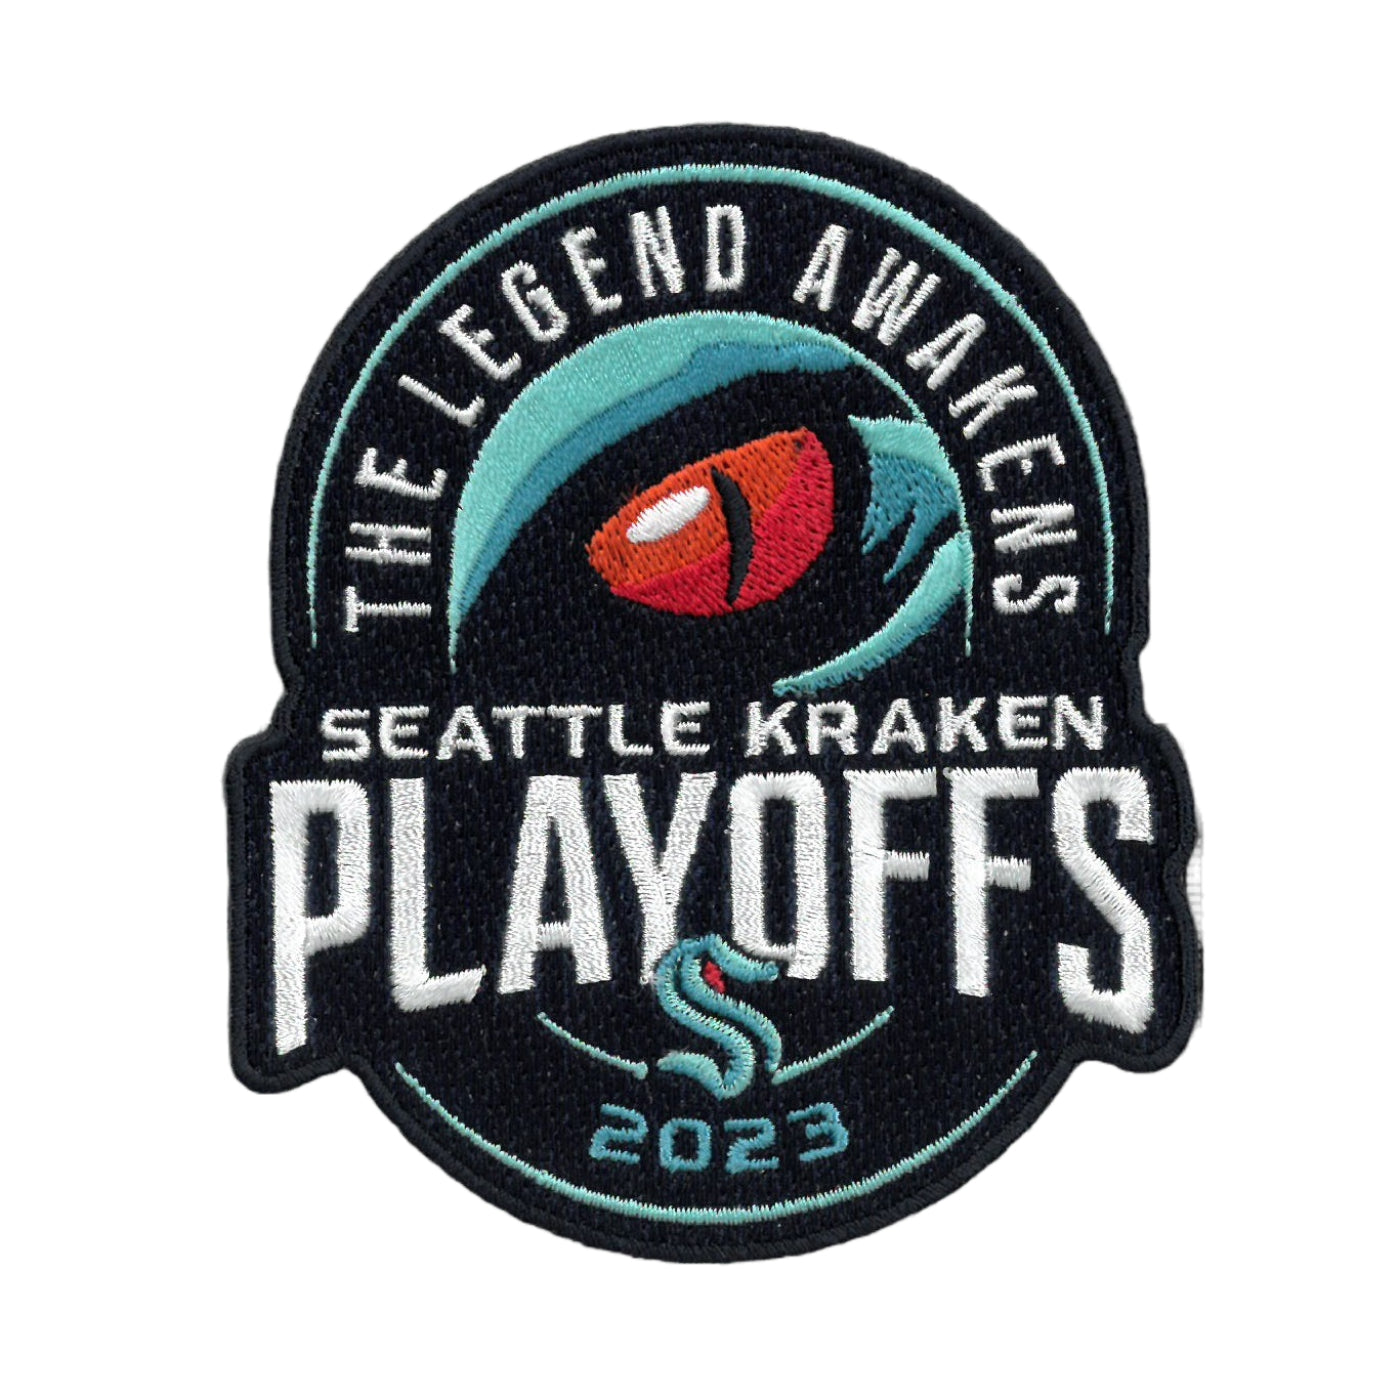 Seattle NHL team has new name: Kraken